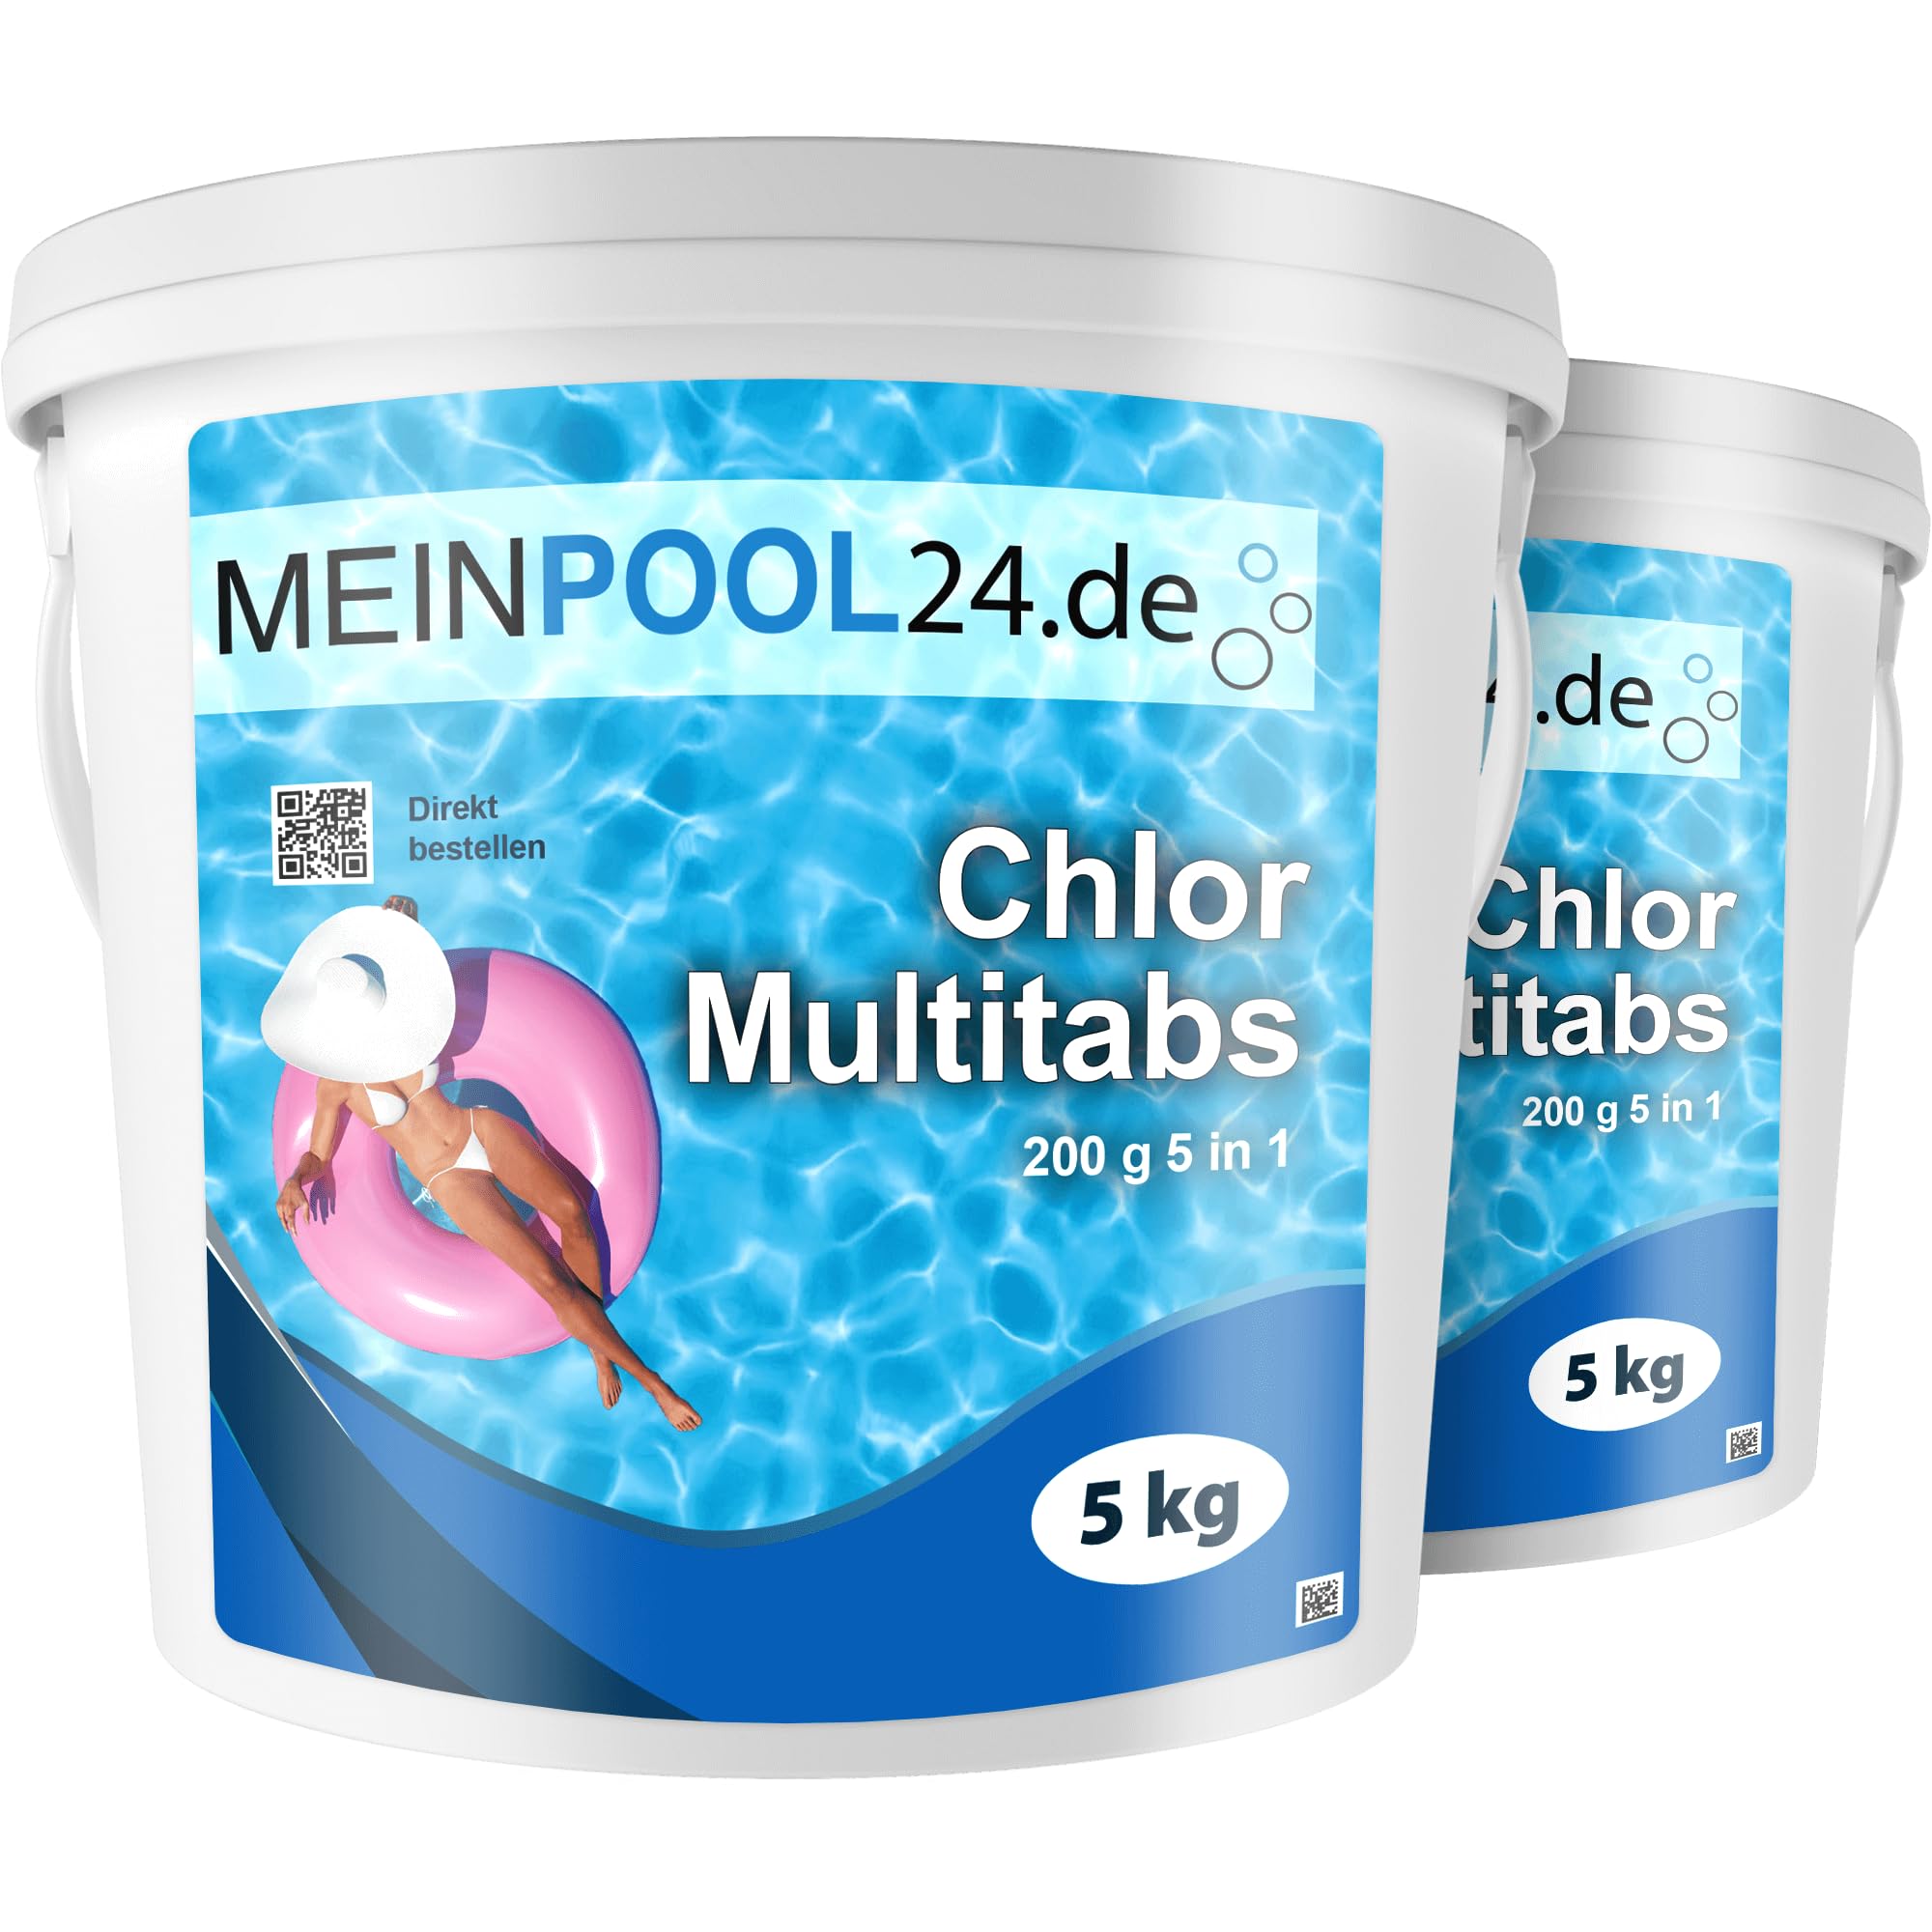 10 kg (2 x 5 kg) MEINPOOL24.DE CHLORMULTITABS CHLOR MULTITABS 5 in 1, 200 g Multifunktionstabletten